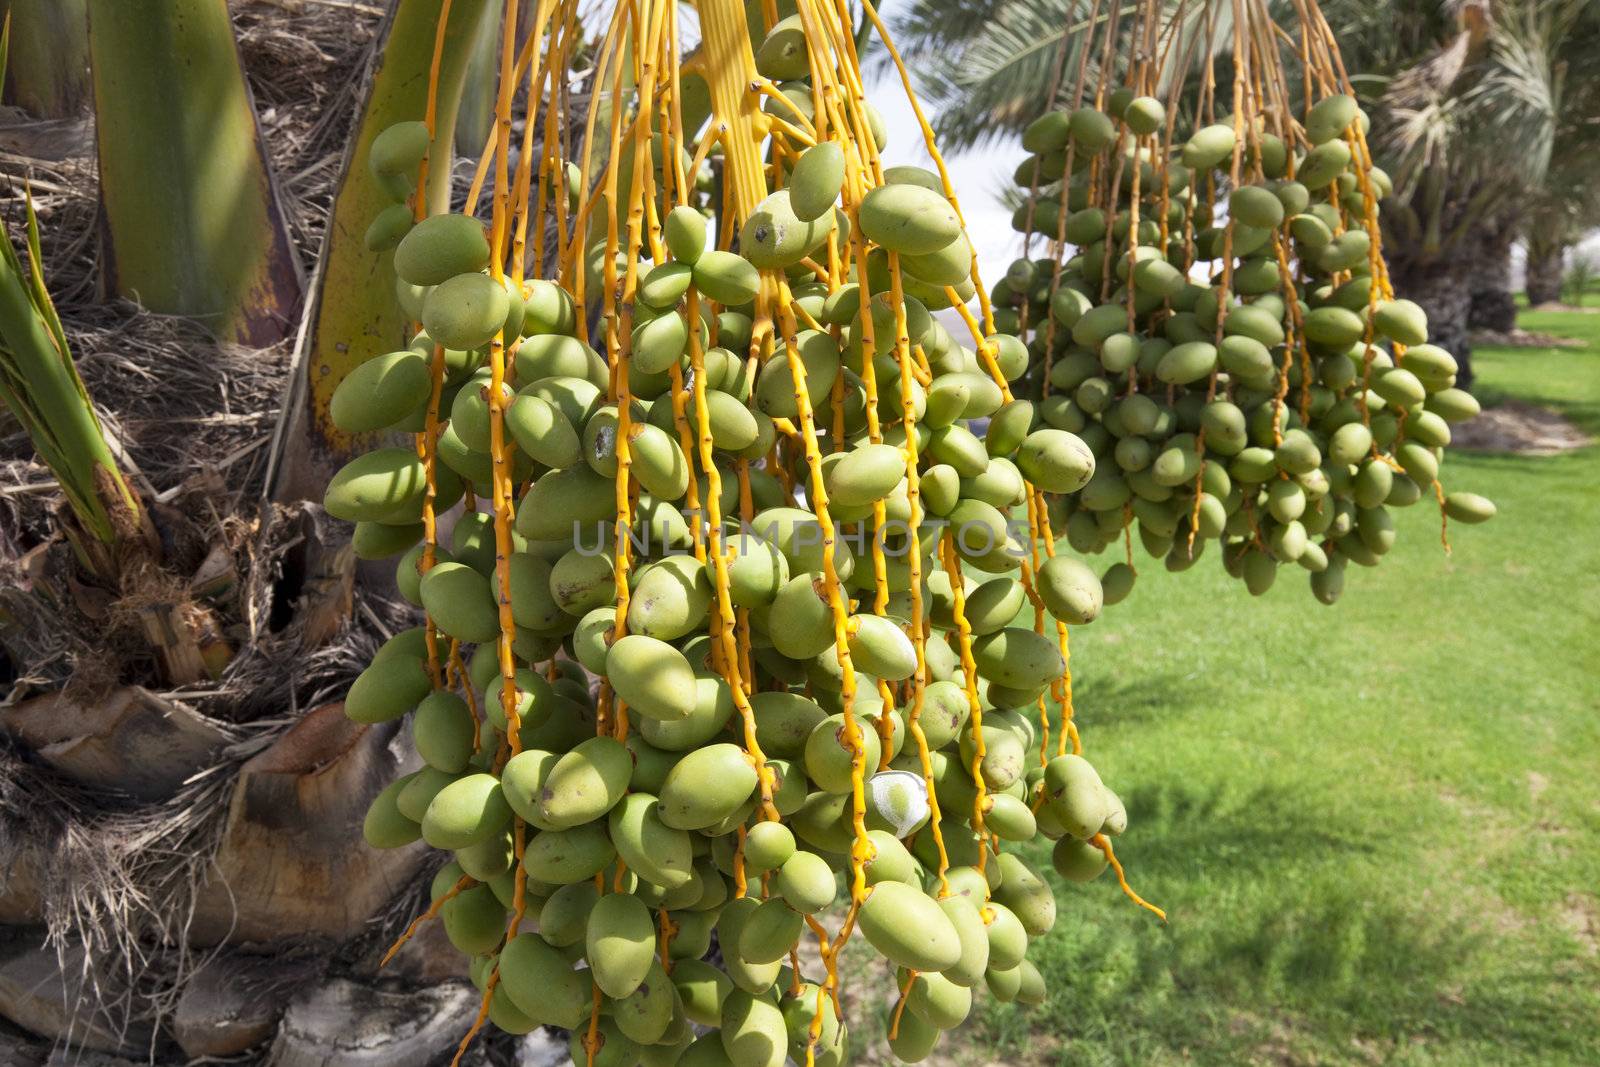 Image of green unripe Arabian dates growing on trees at Abu Dhabi, United Arab Emirates.